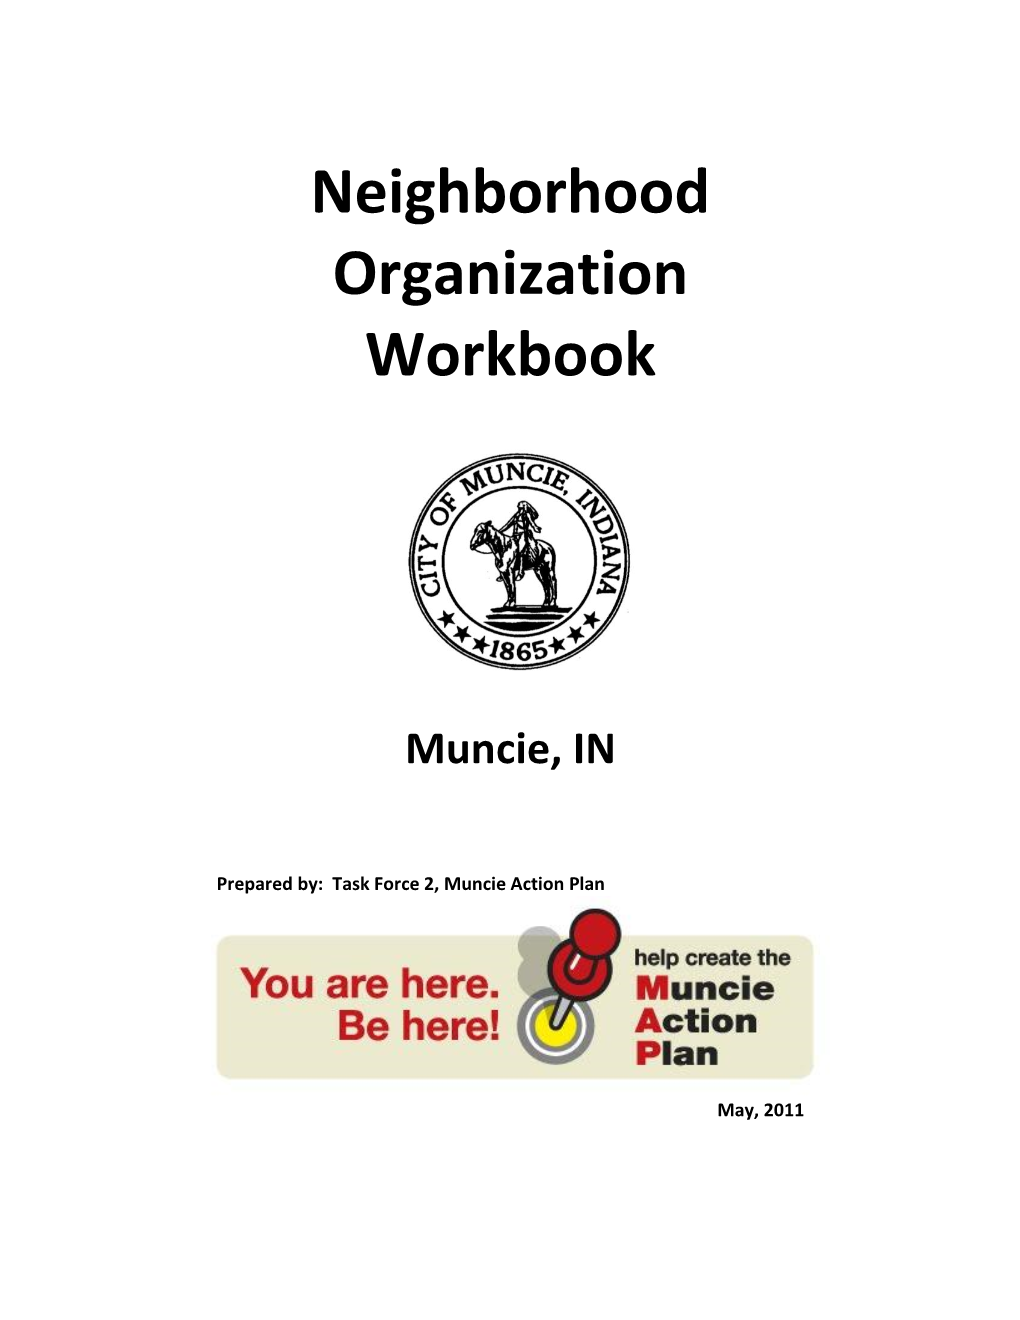 Neighborhood Organization Workbook